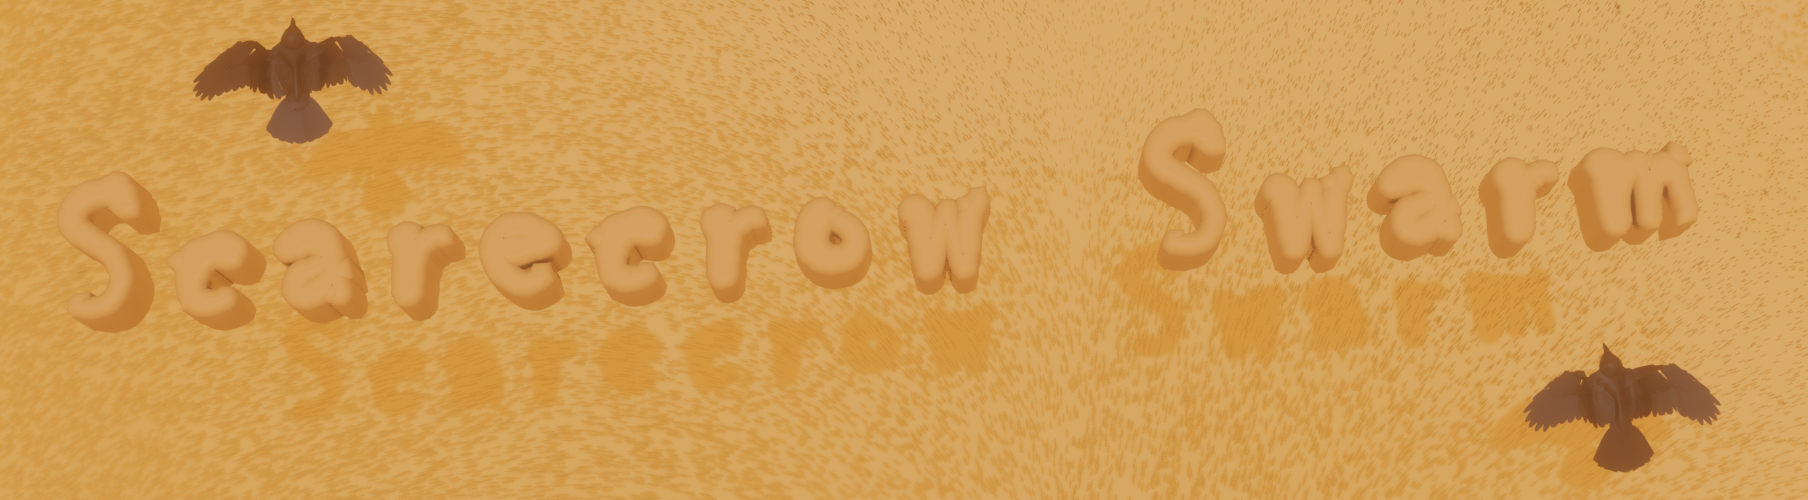 Scarecrow Swarm